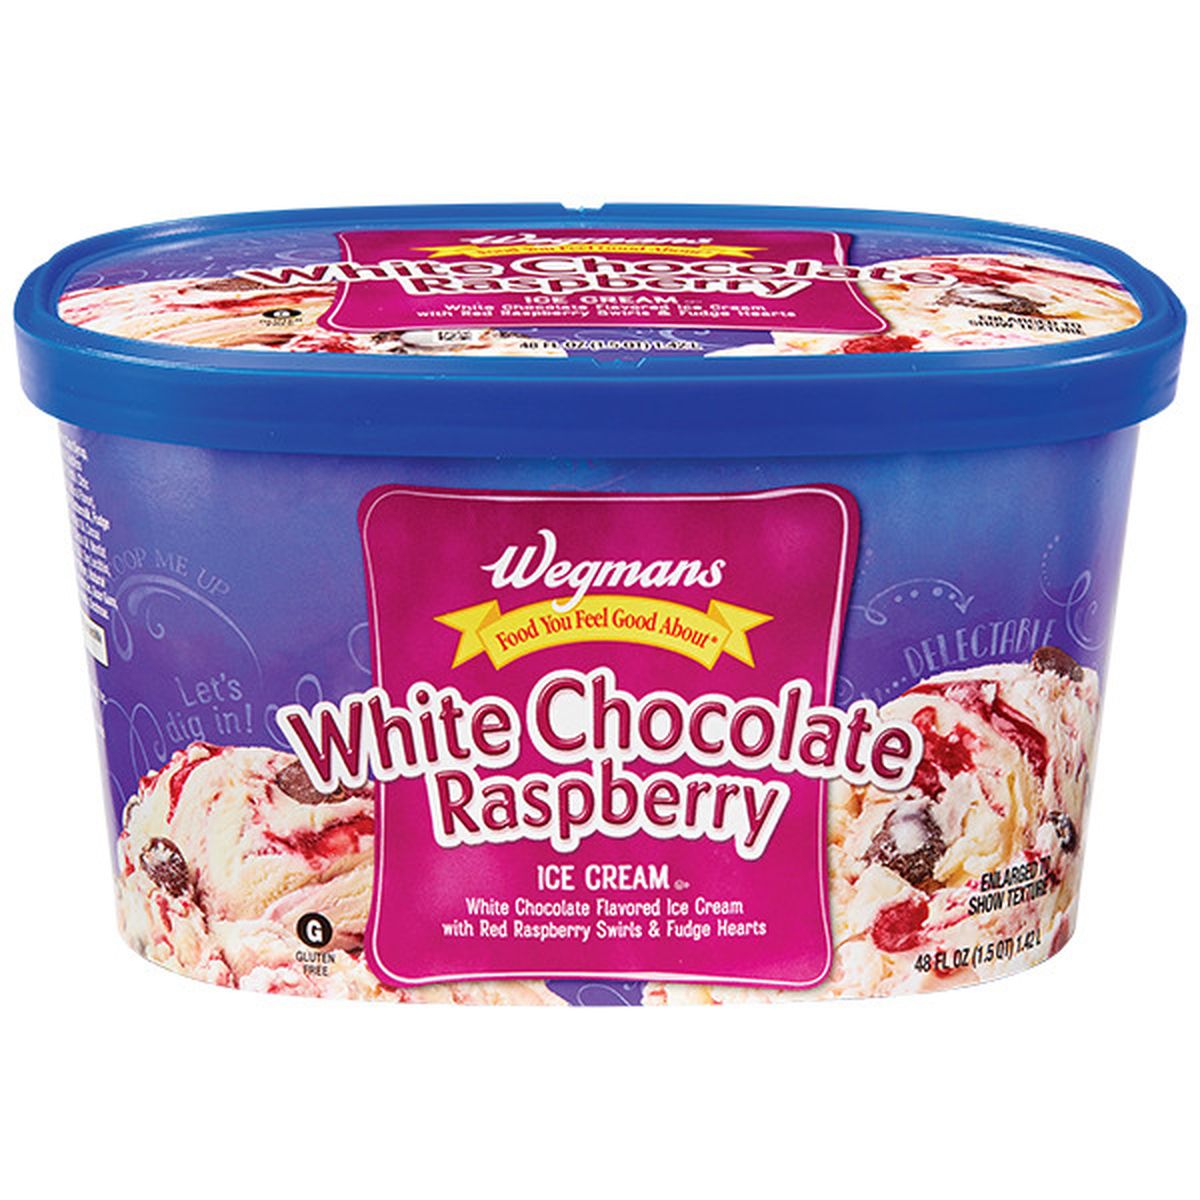 Calories in Wegmans White Chocolate Raspberry Ice Cream